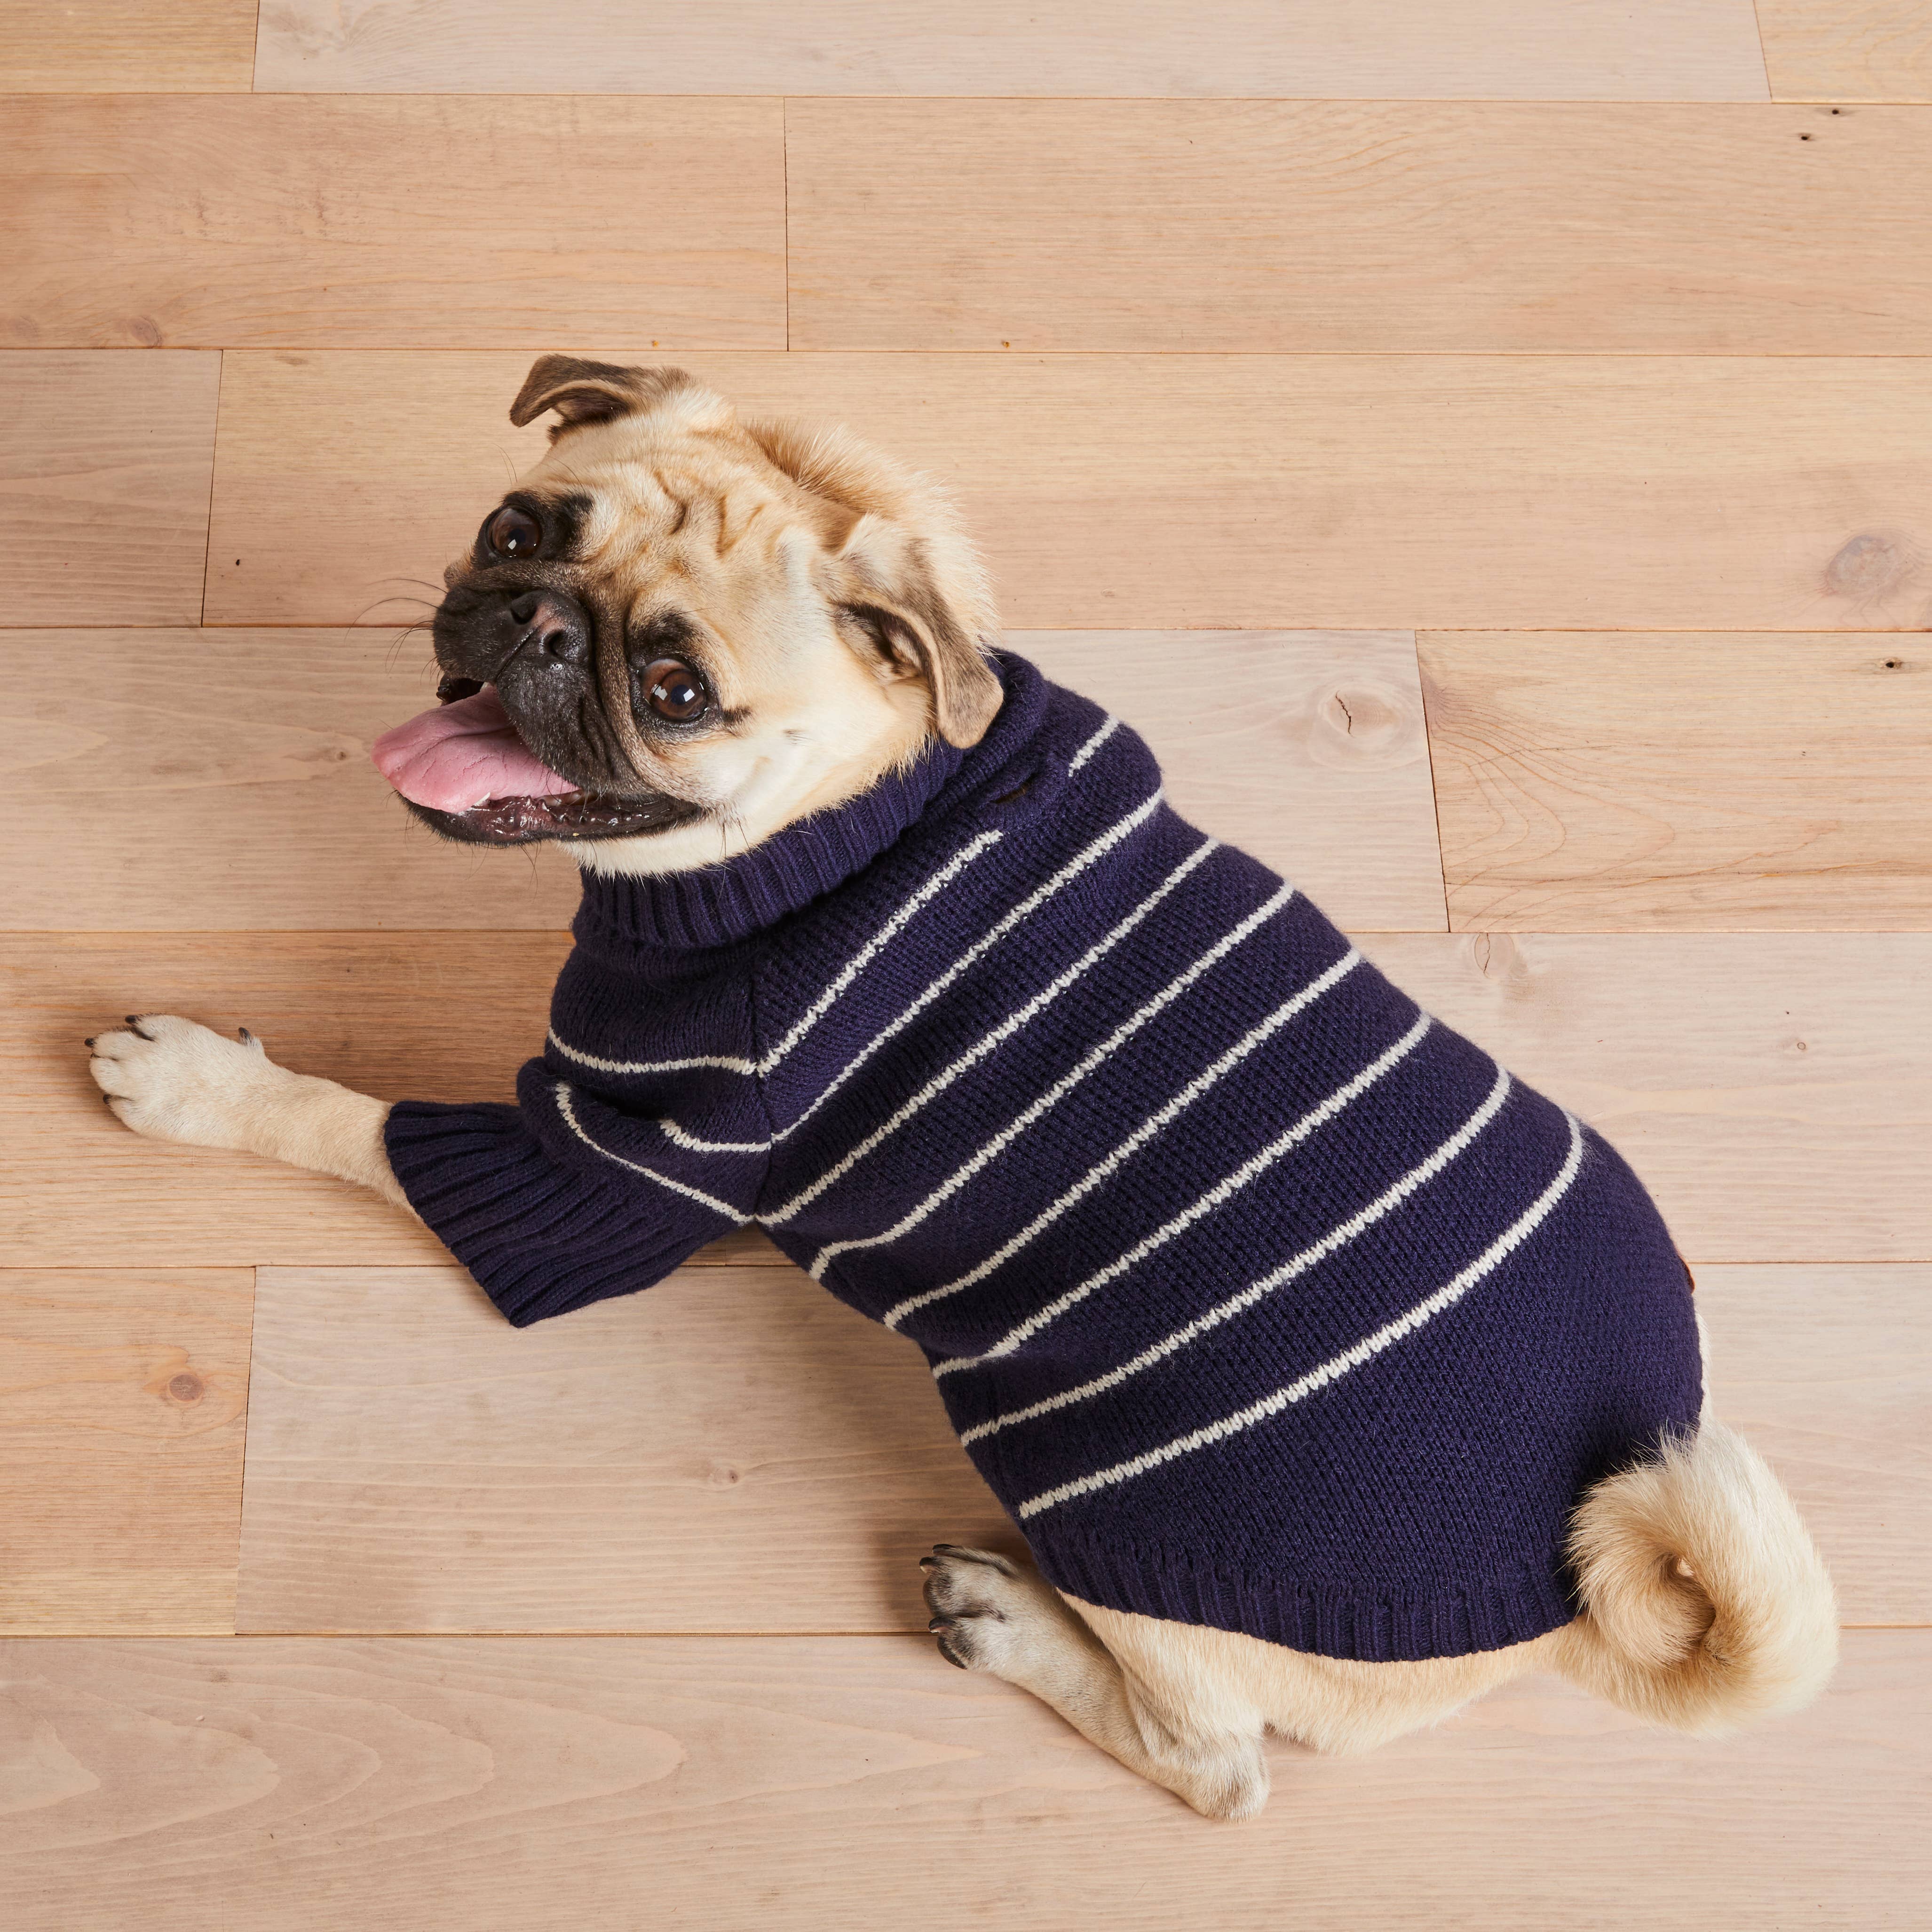 The Foggy Dog x Draper James Mariner Stripe Dog Sweater